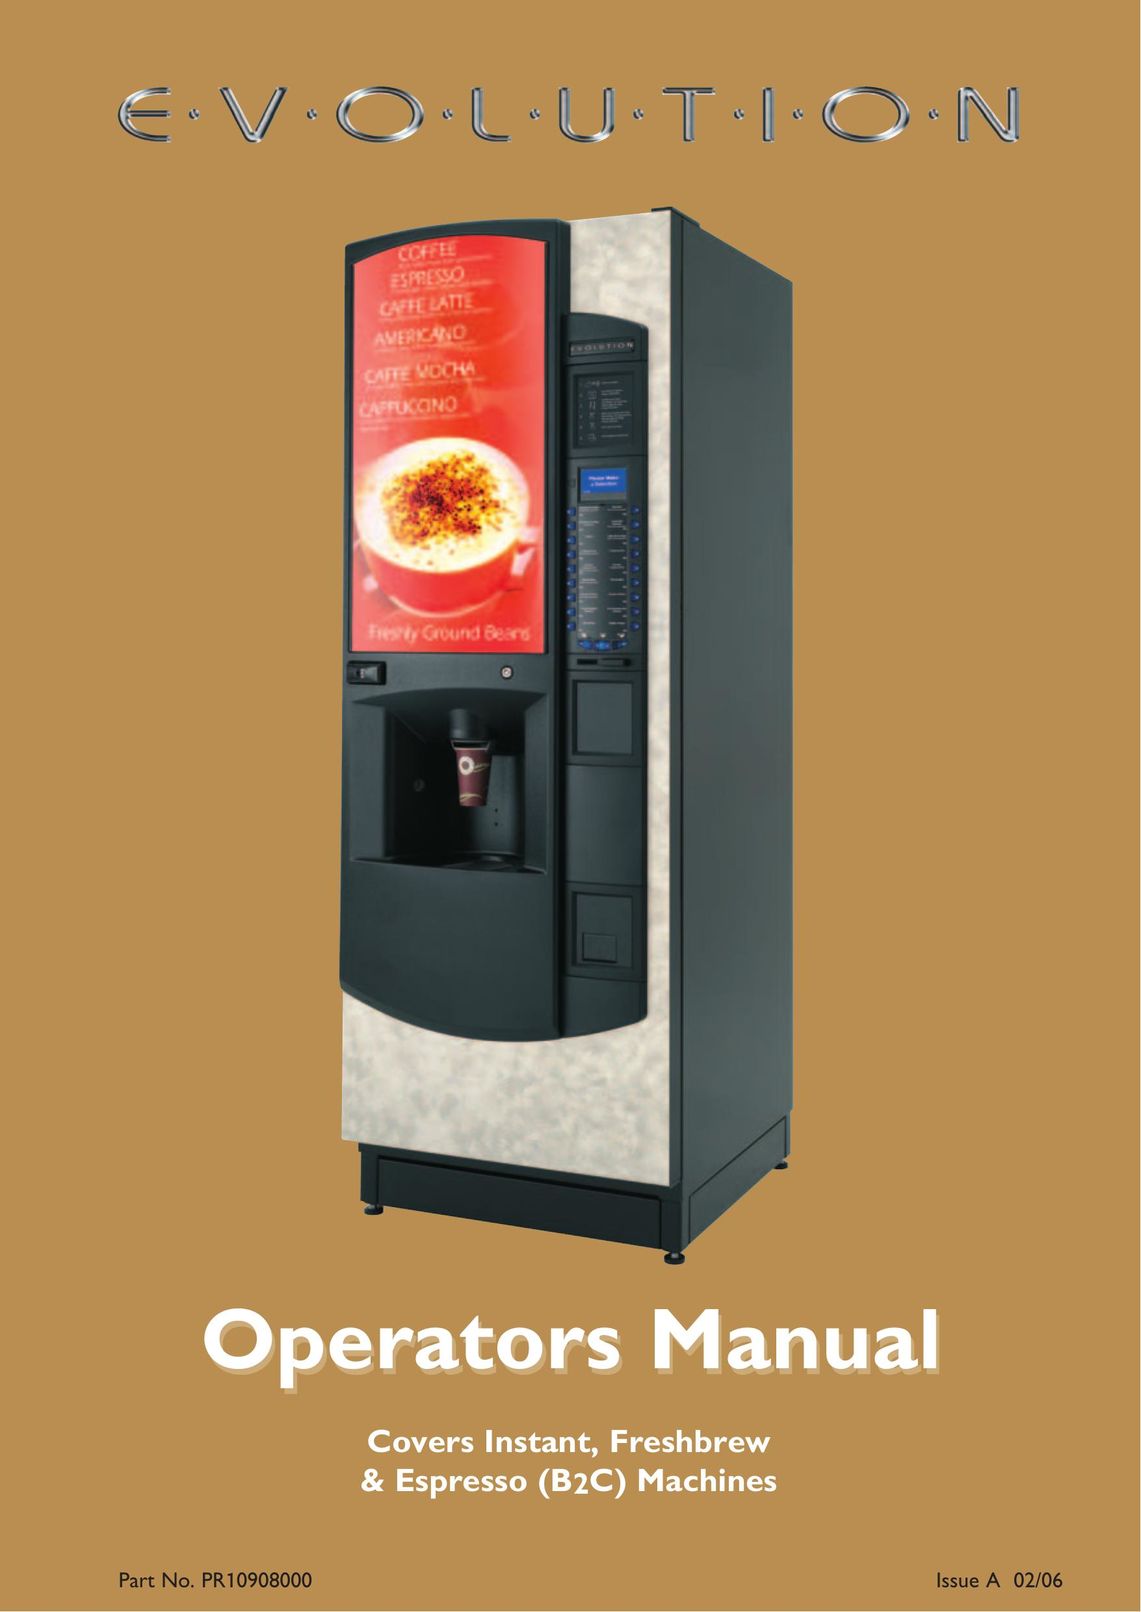 Evolution Technologies Instant, Freshbrew & Espresso (B2C) Machine Coffeemaker User Manual